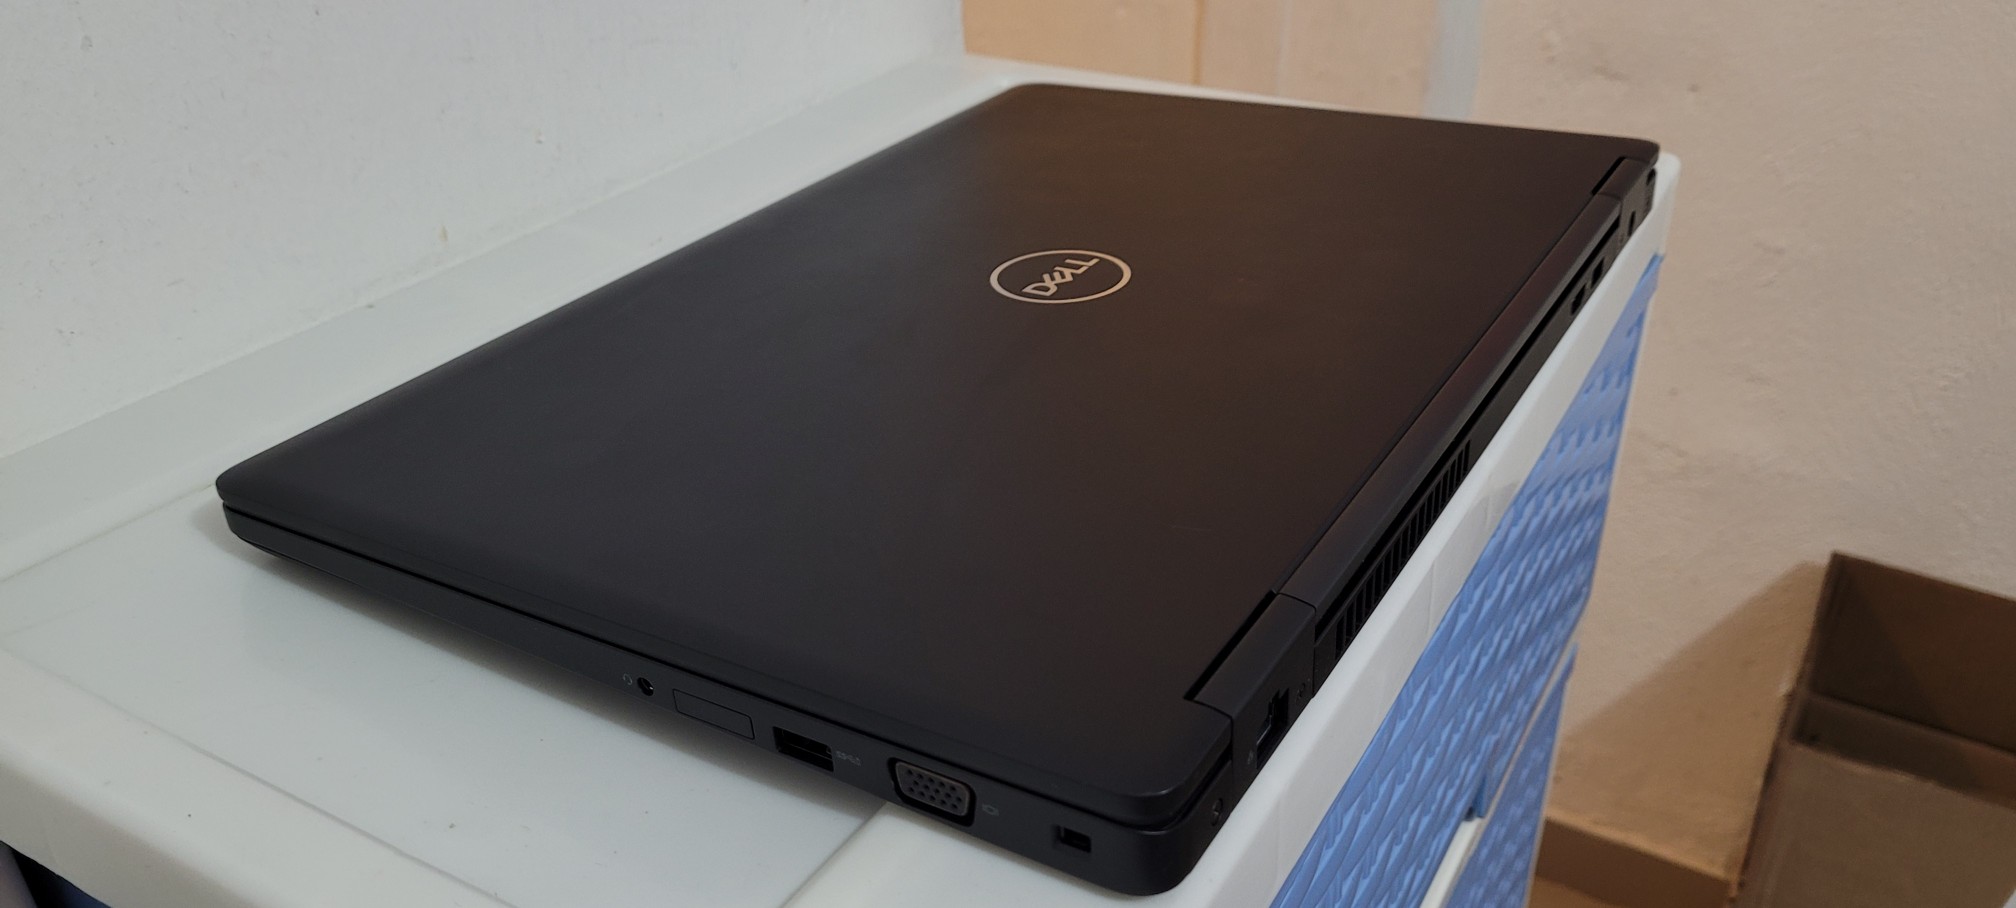 computadoras y laptops - Dell 5550 17 Pulg Core i7 Ram 12gb Disco 128gb SSD hdmi 2